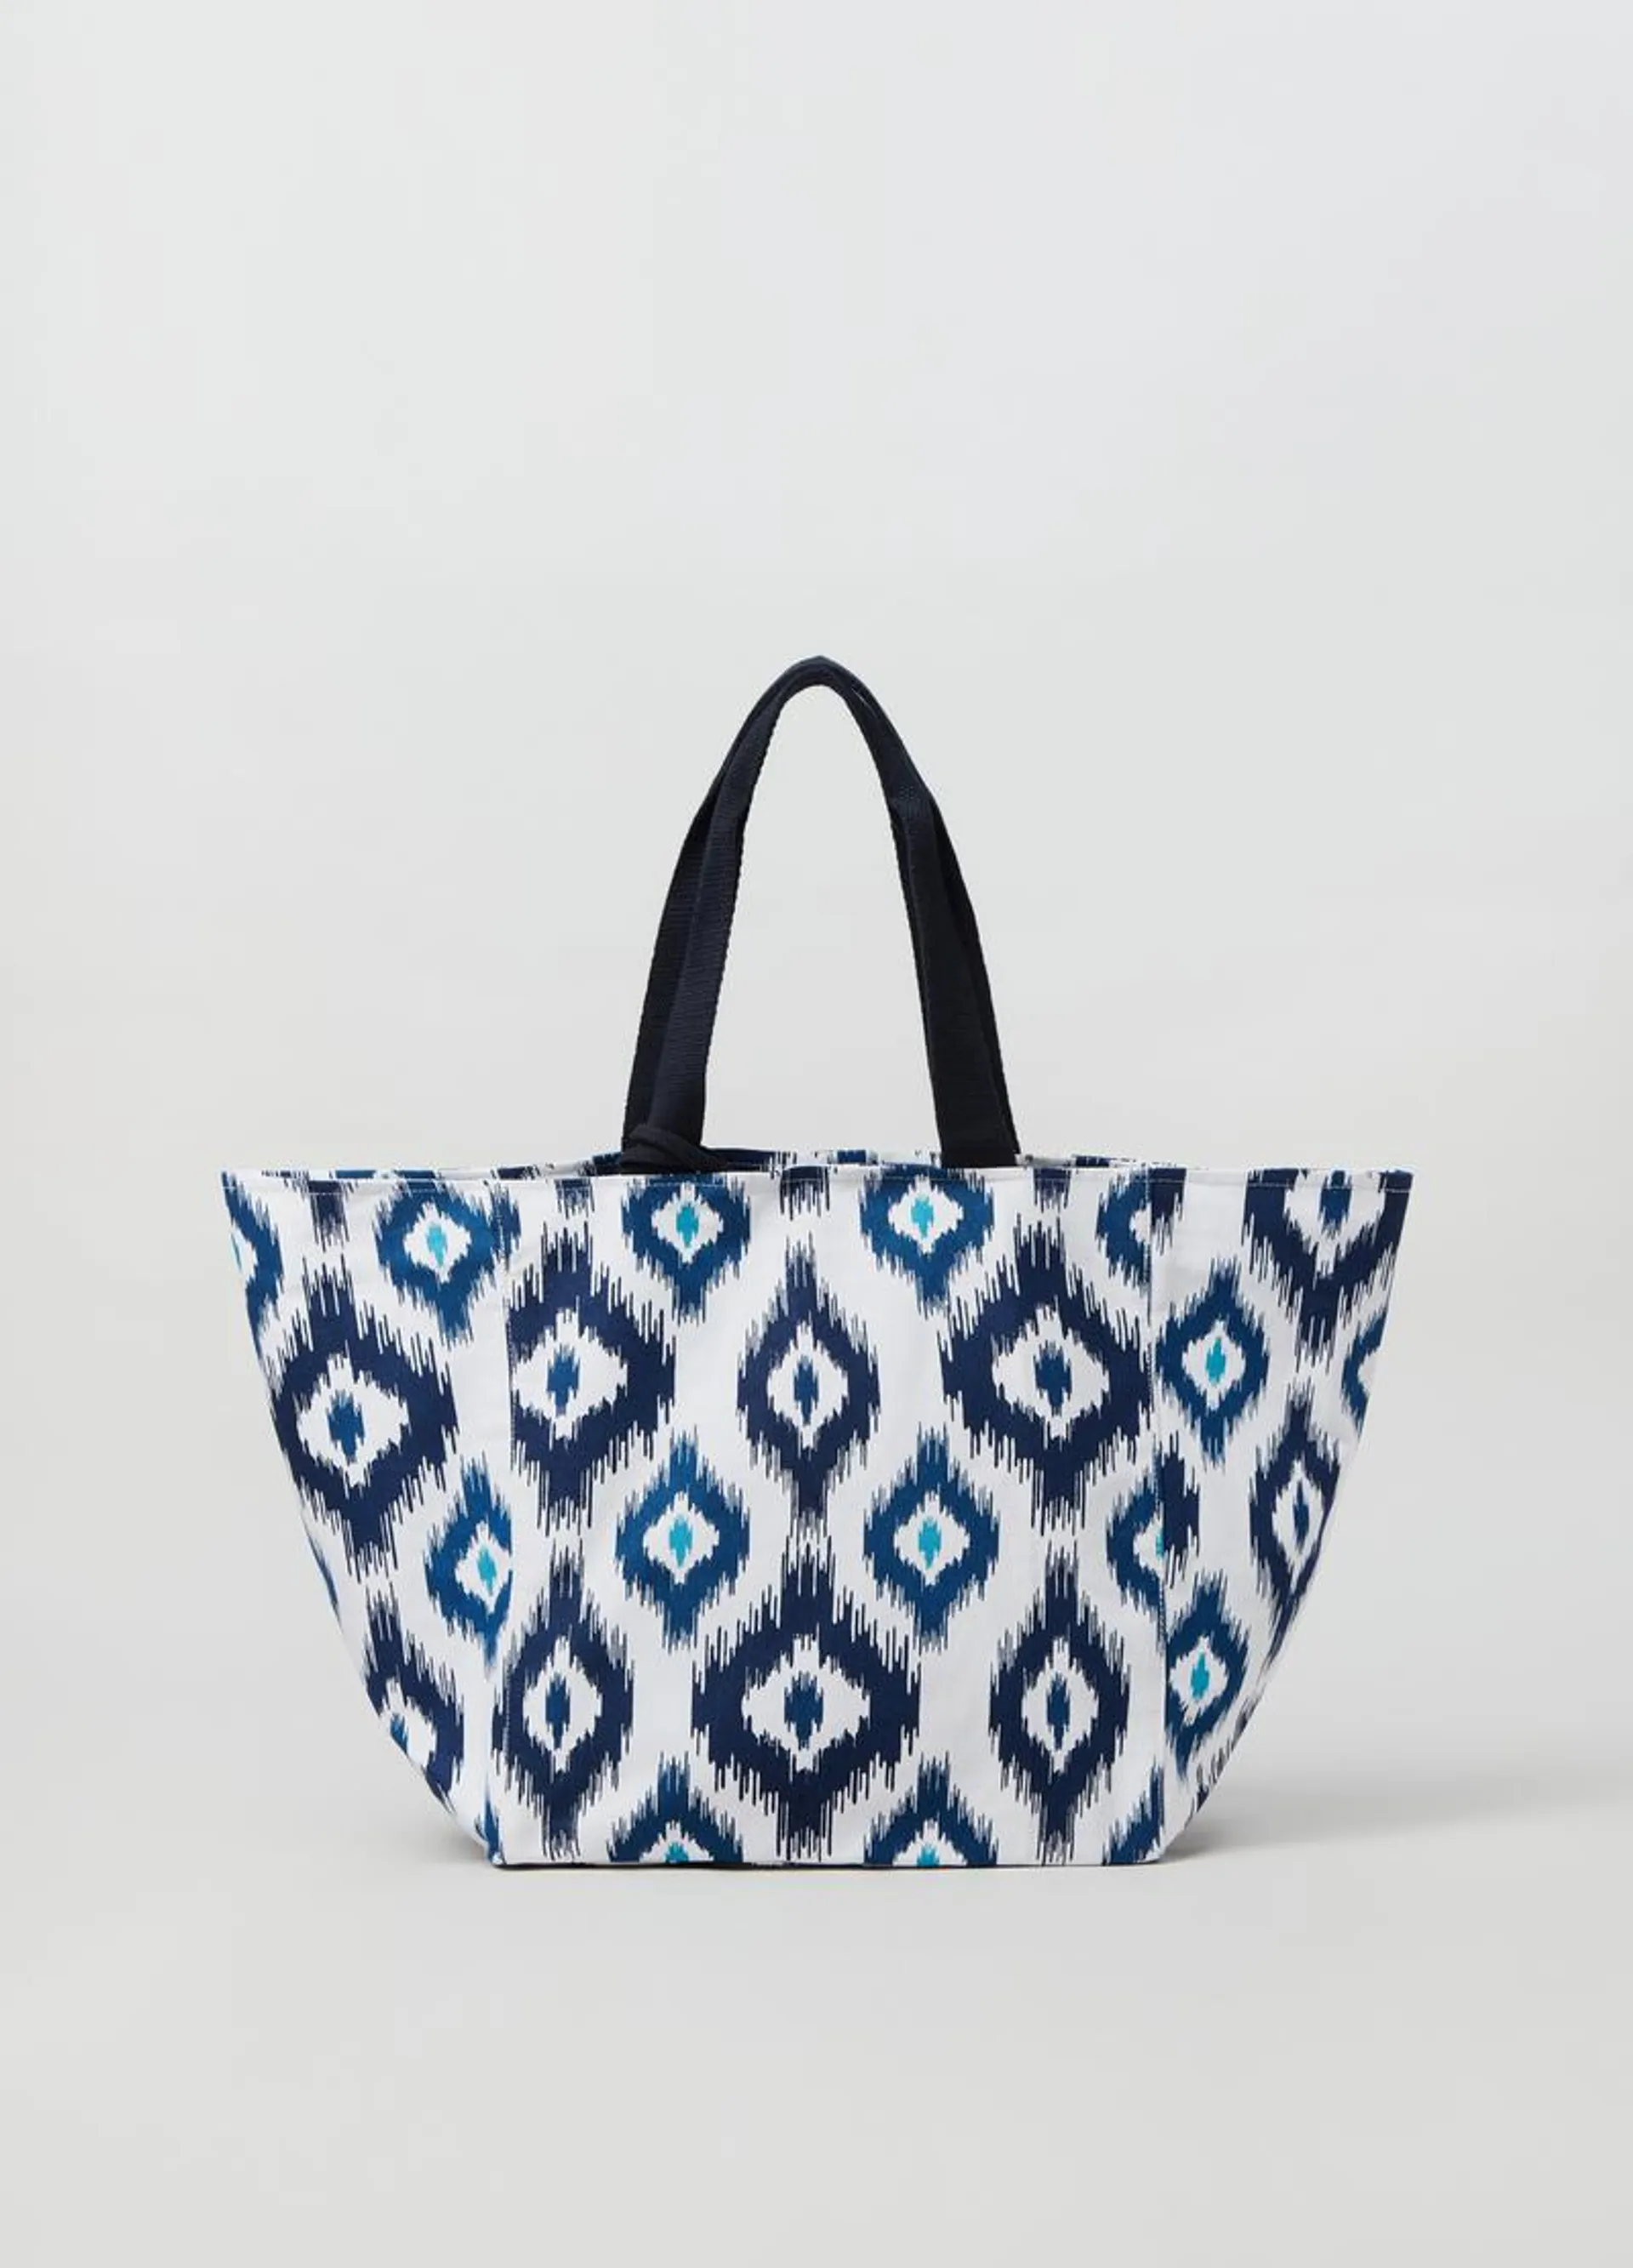 PIOMBO shopping bag with ikat print